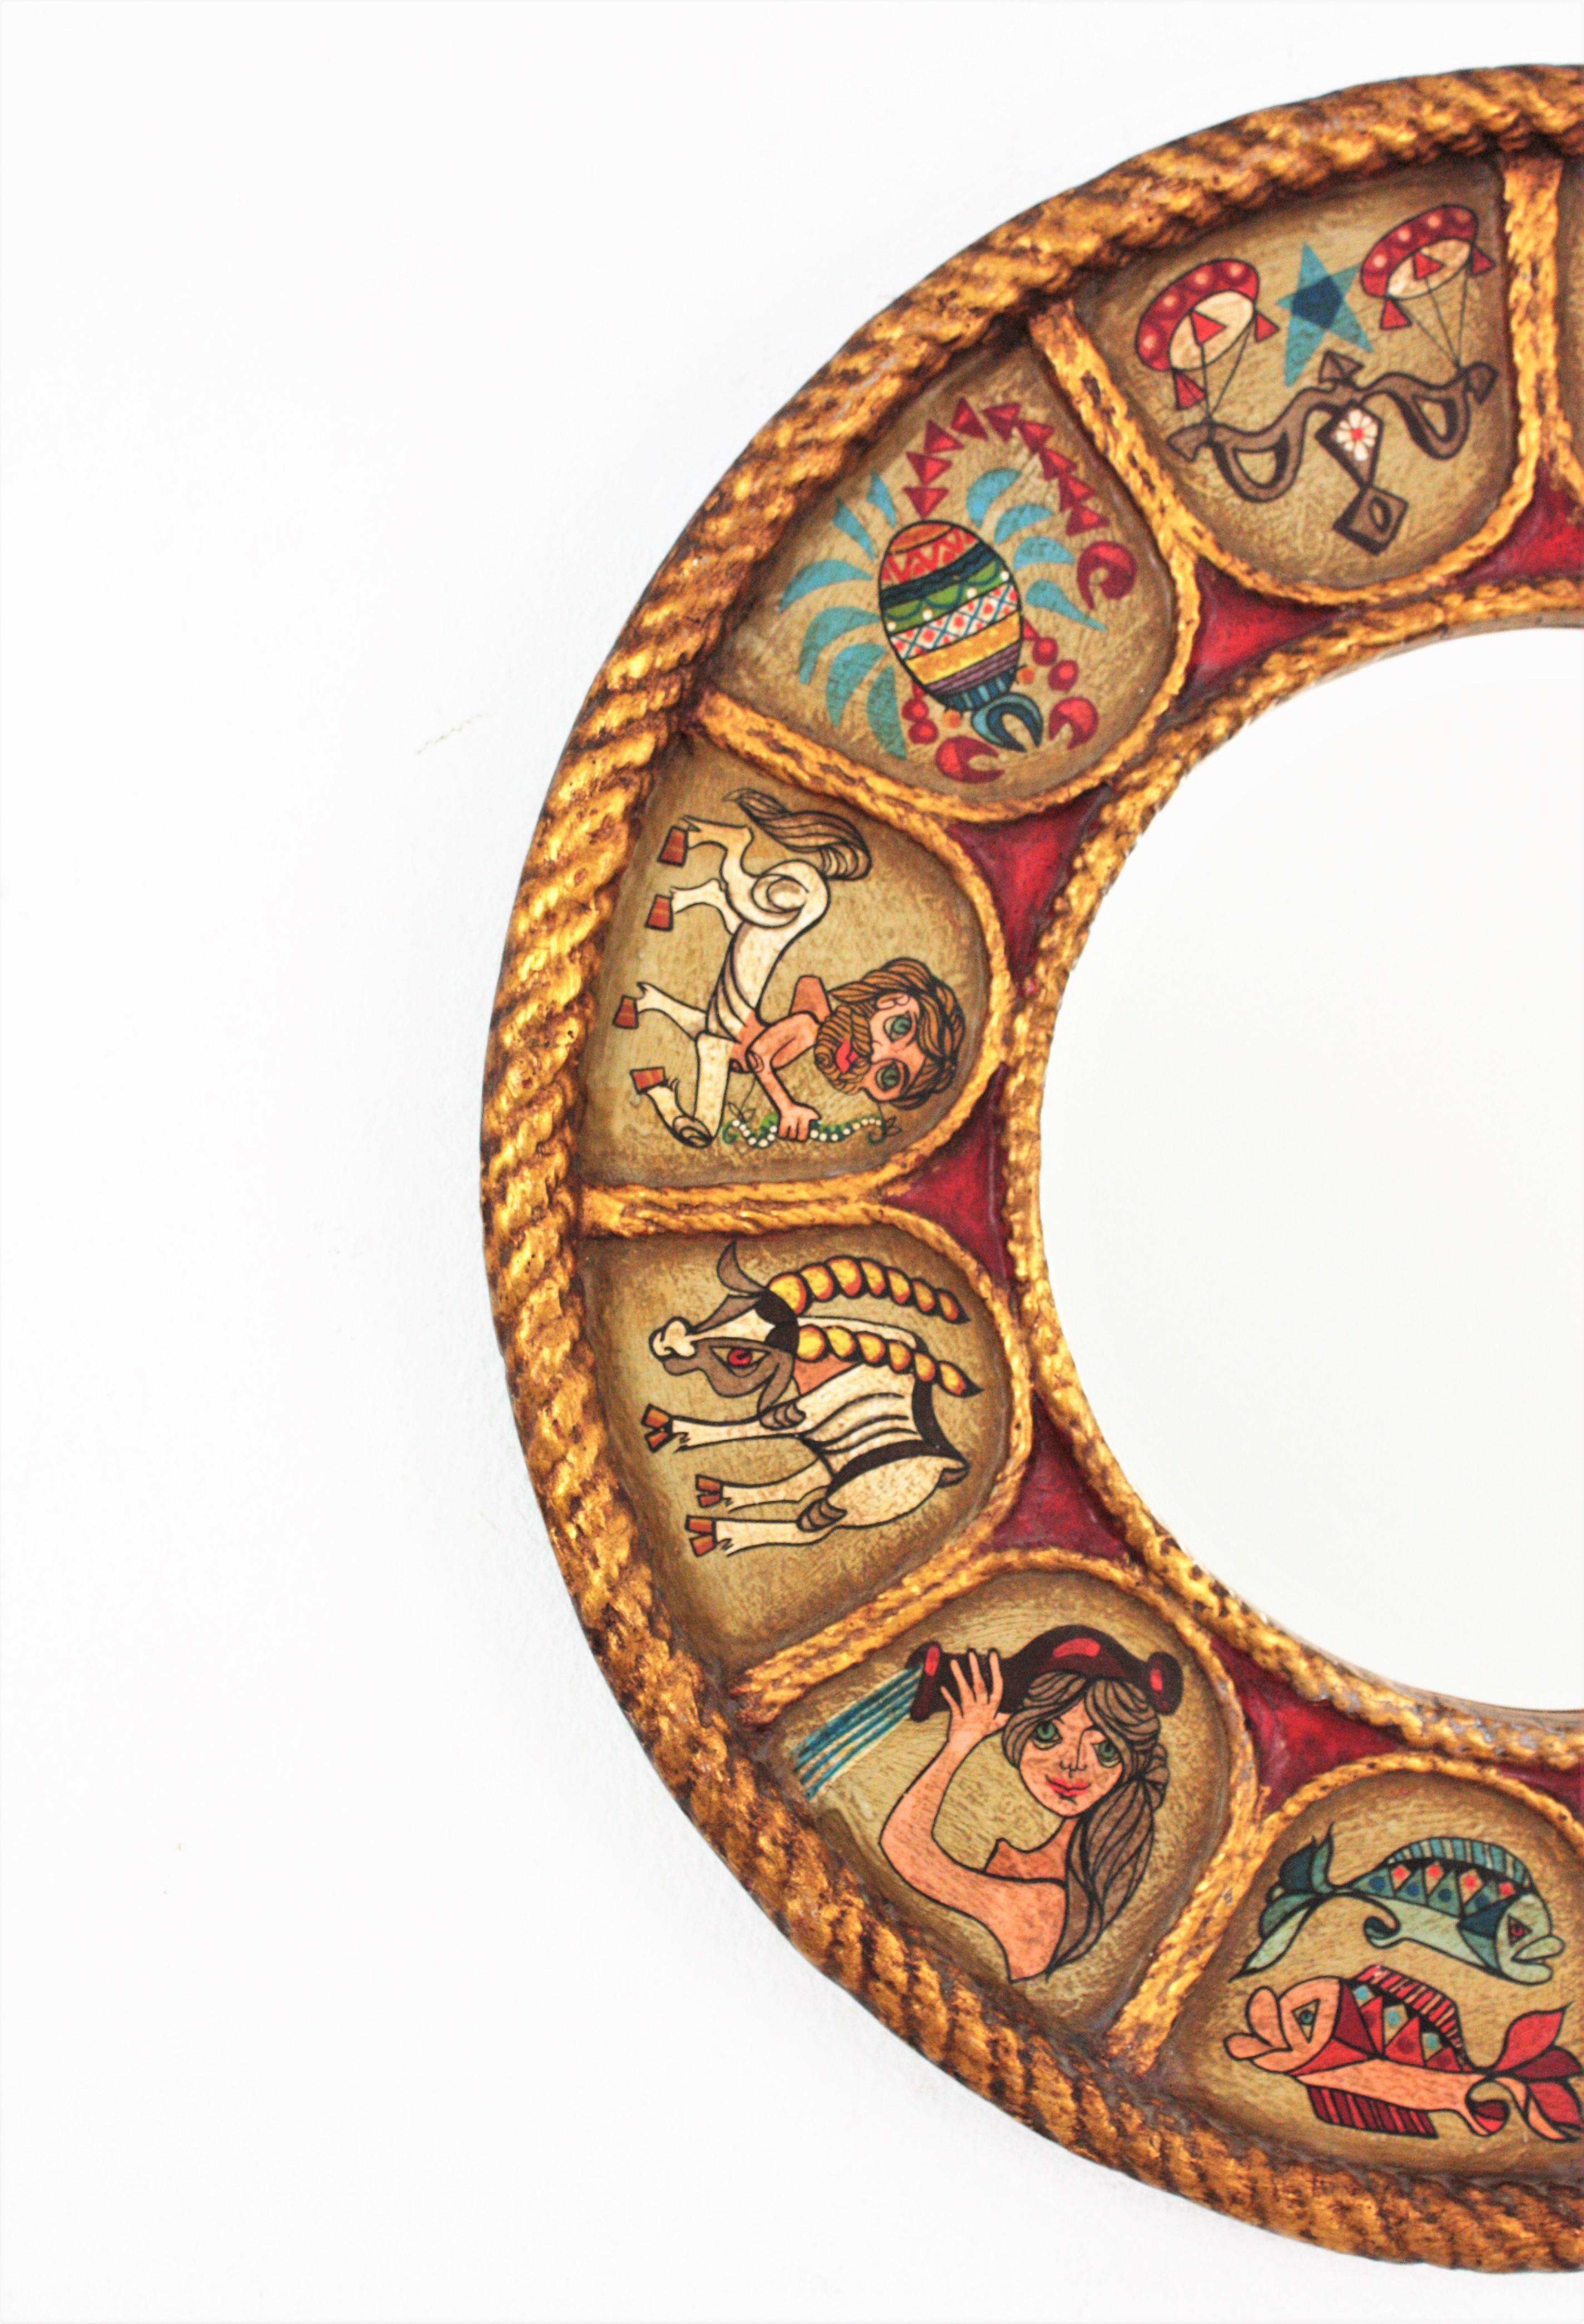 Runder spanischer Zodiac-Spiegel aus vergoldetem, polychromem Holz, 1950er Jahre (Vergoldet) im Angebot